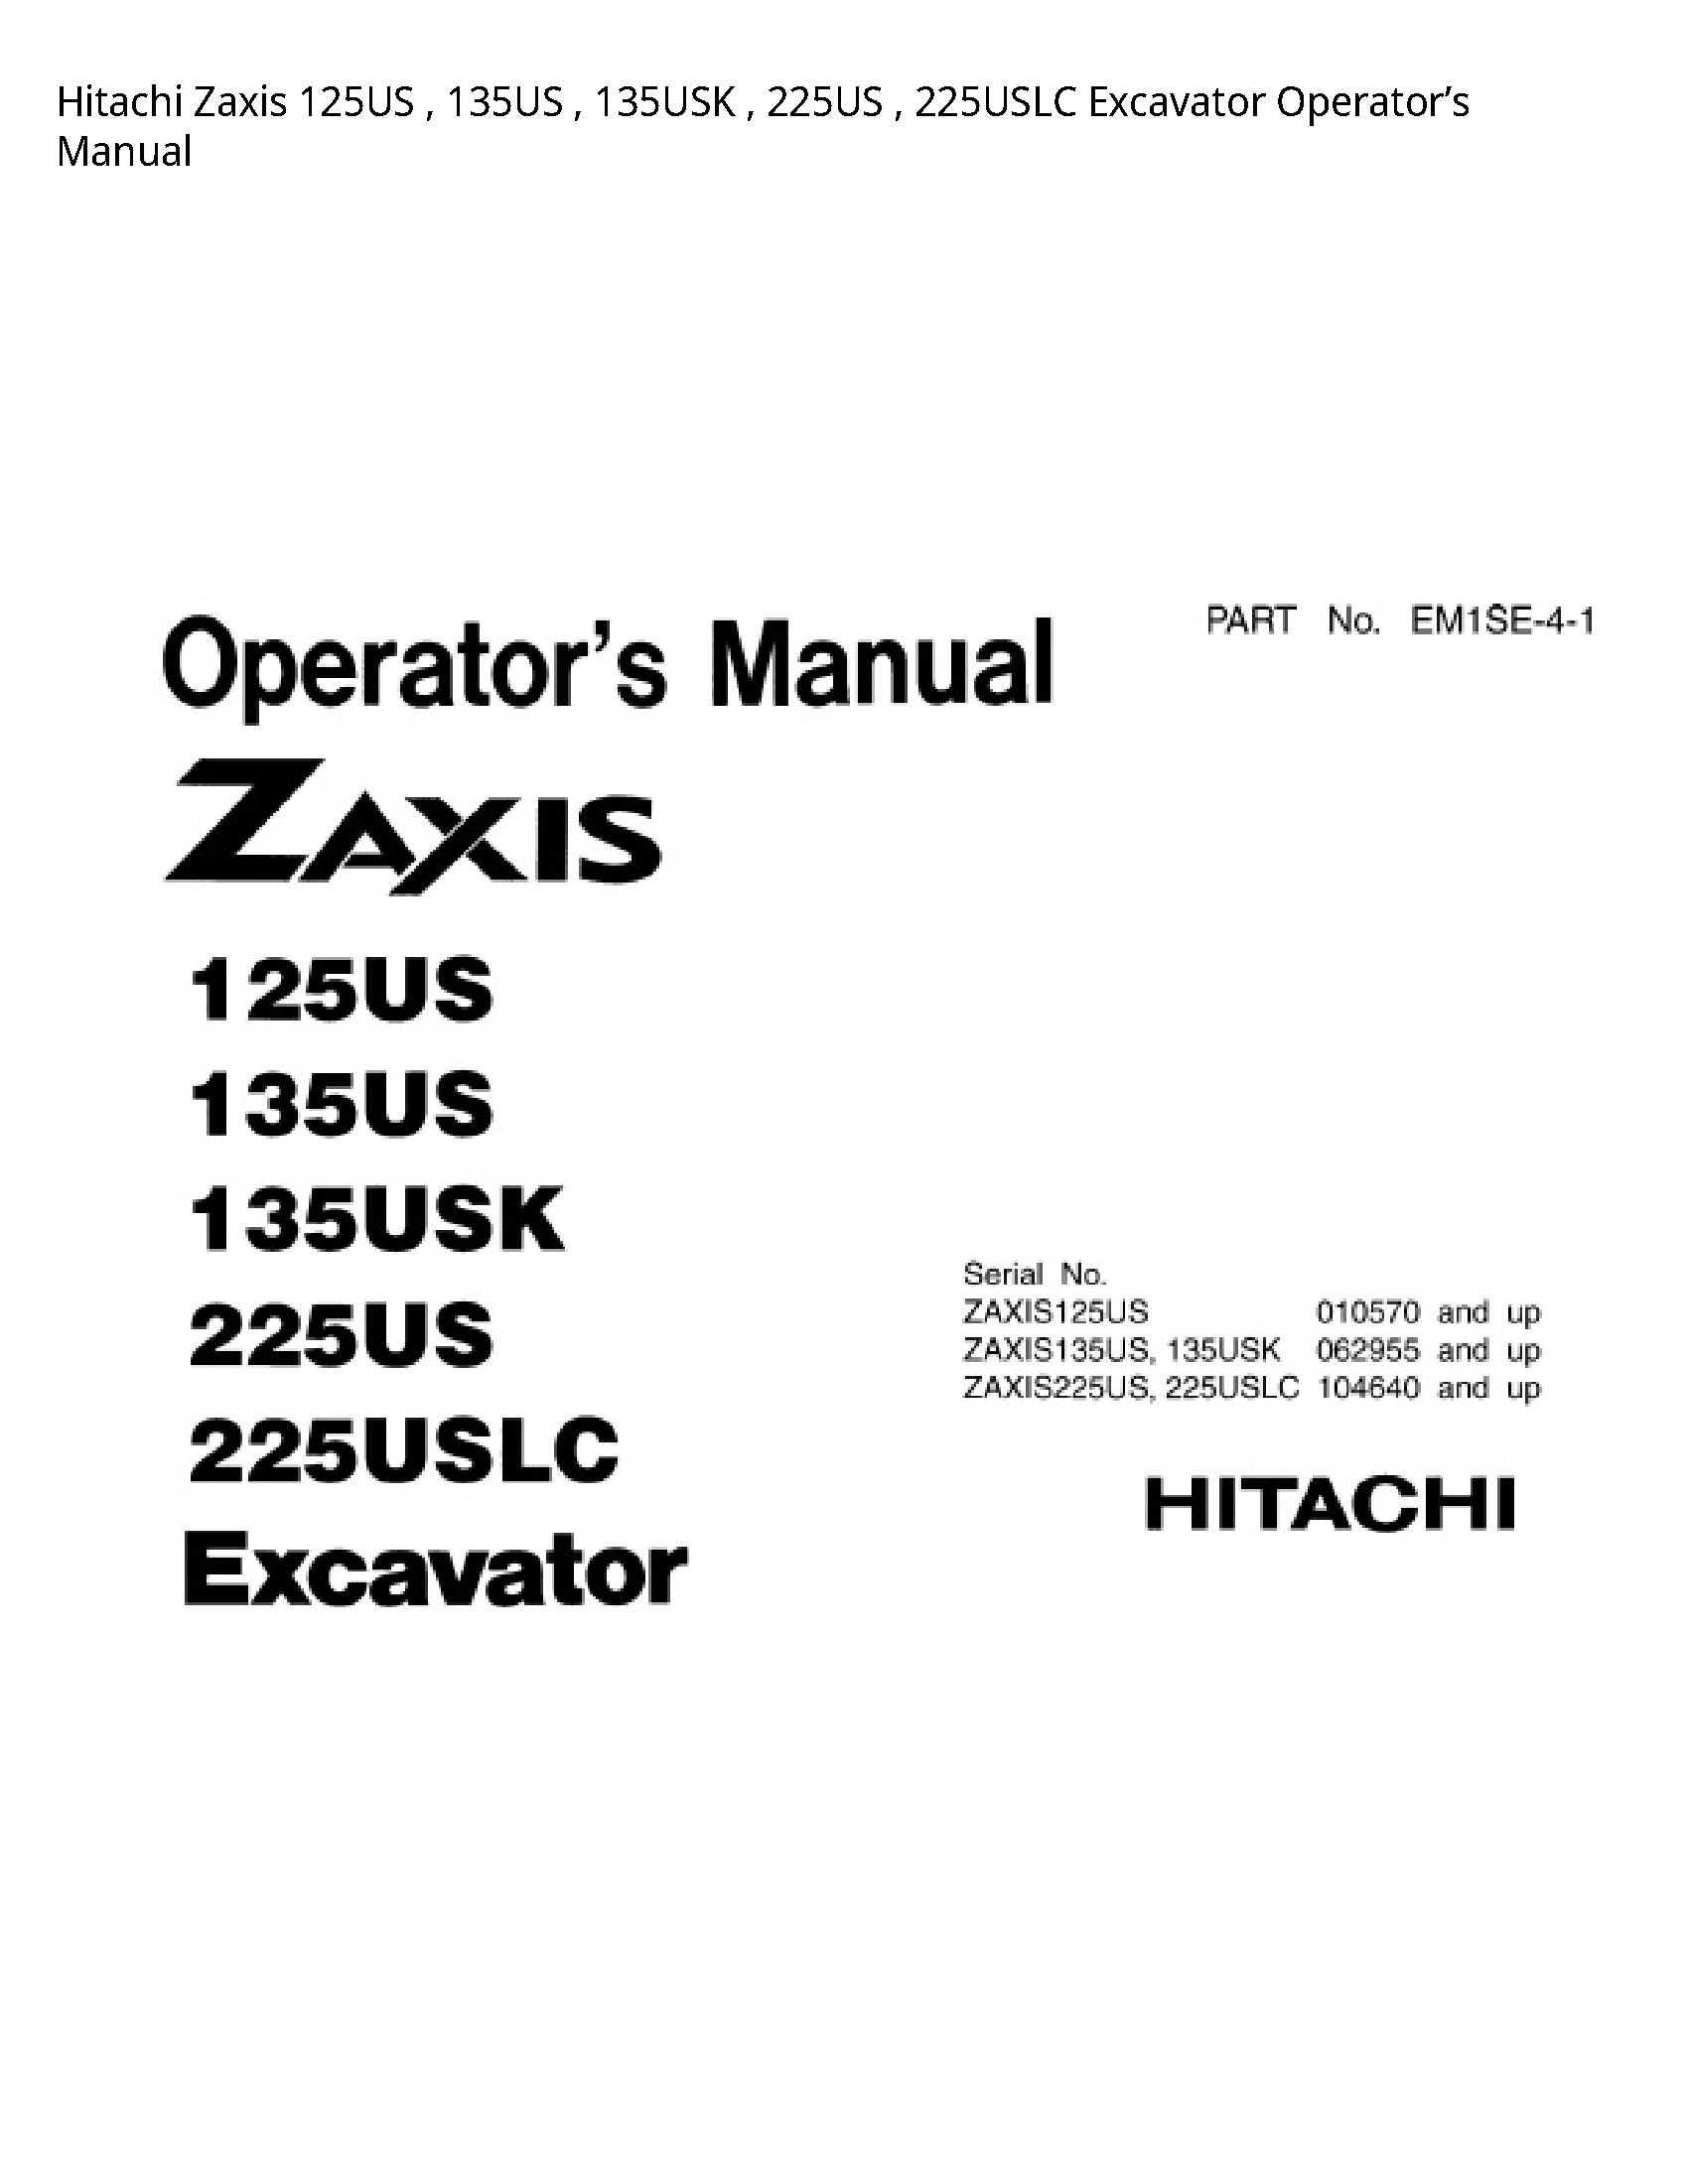 Hitachi 125US Zaxis Excavator Operator’s manual